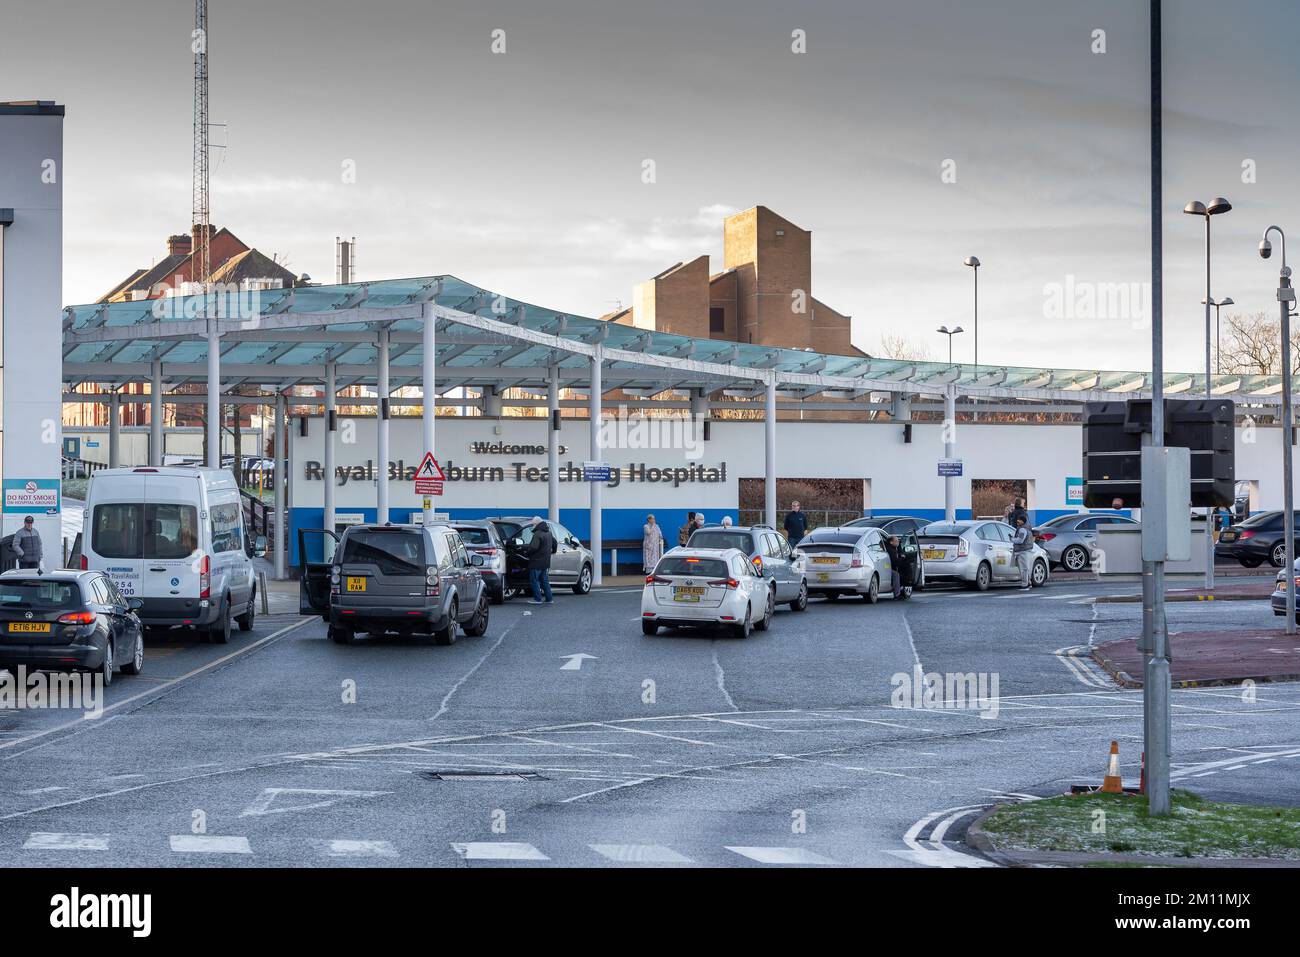 Taken at Royal Blackburn Teaching Hospital, Blackburn, Lancashire, UK on 9 Dec 2022. Entrance and drop off point for hospital patients and visitors. Stock Photo